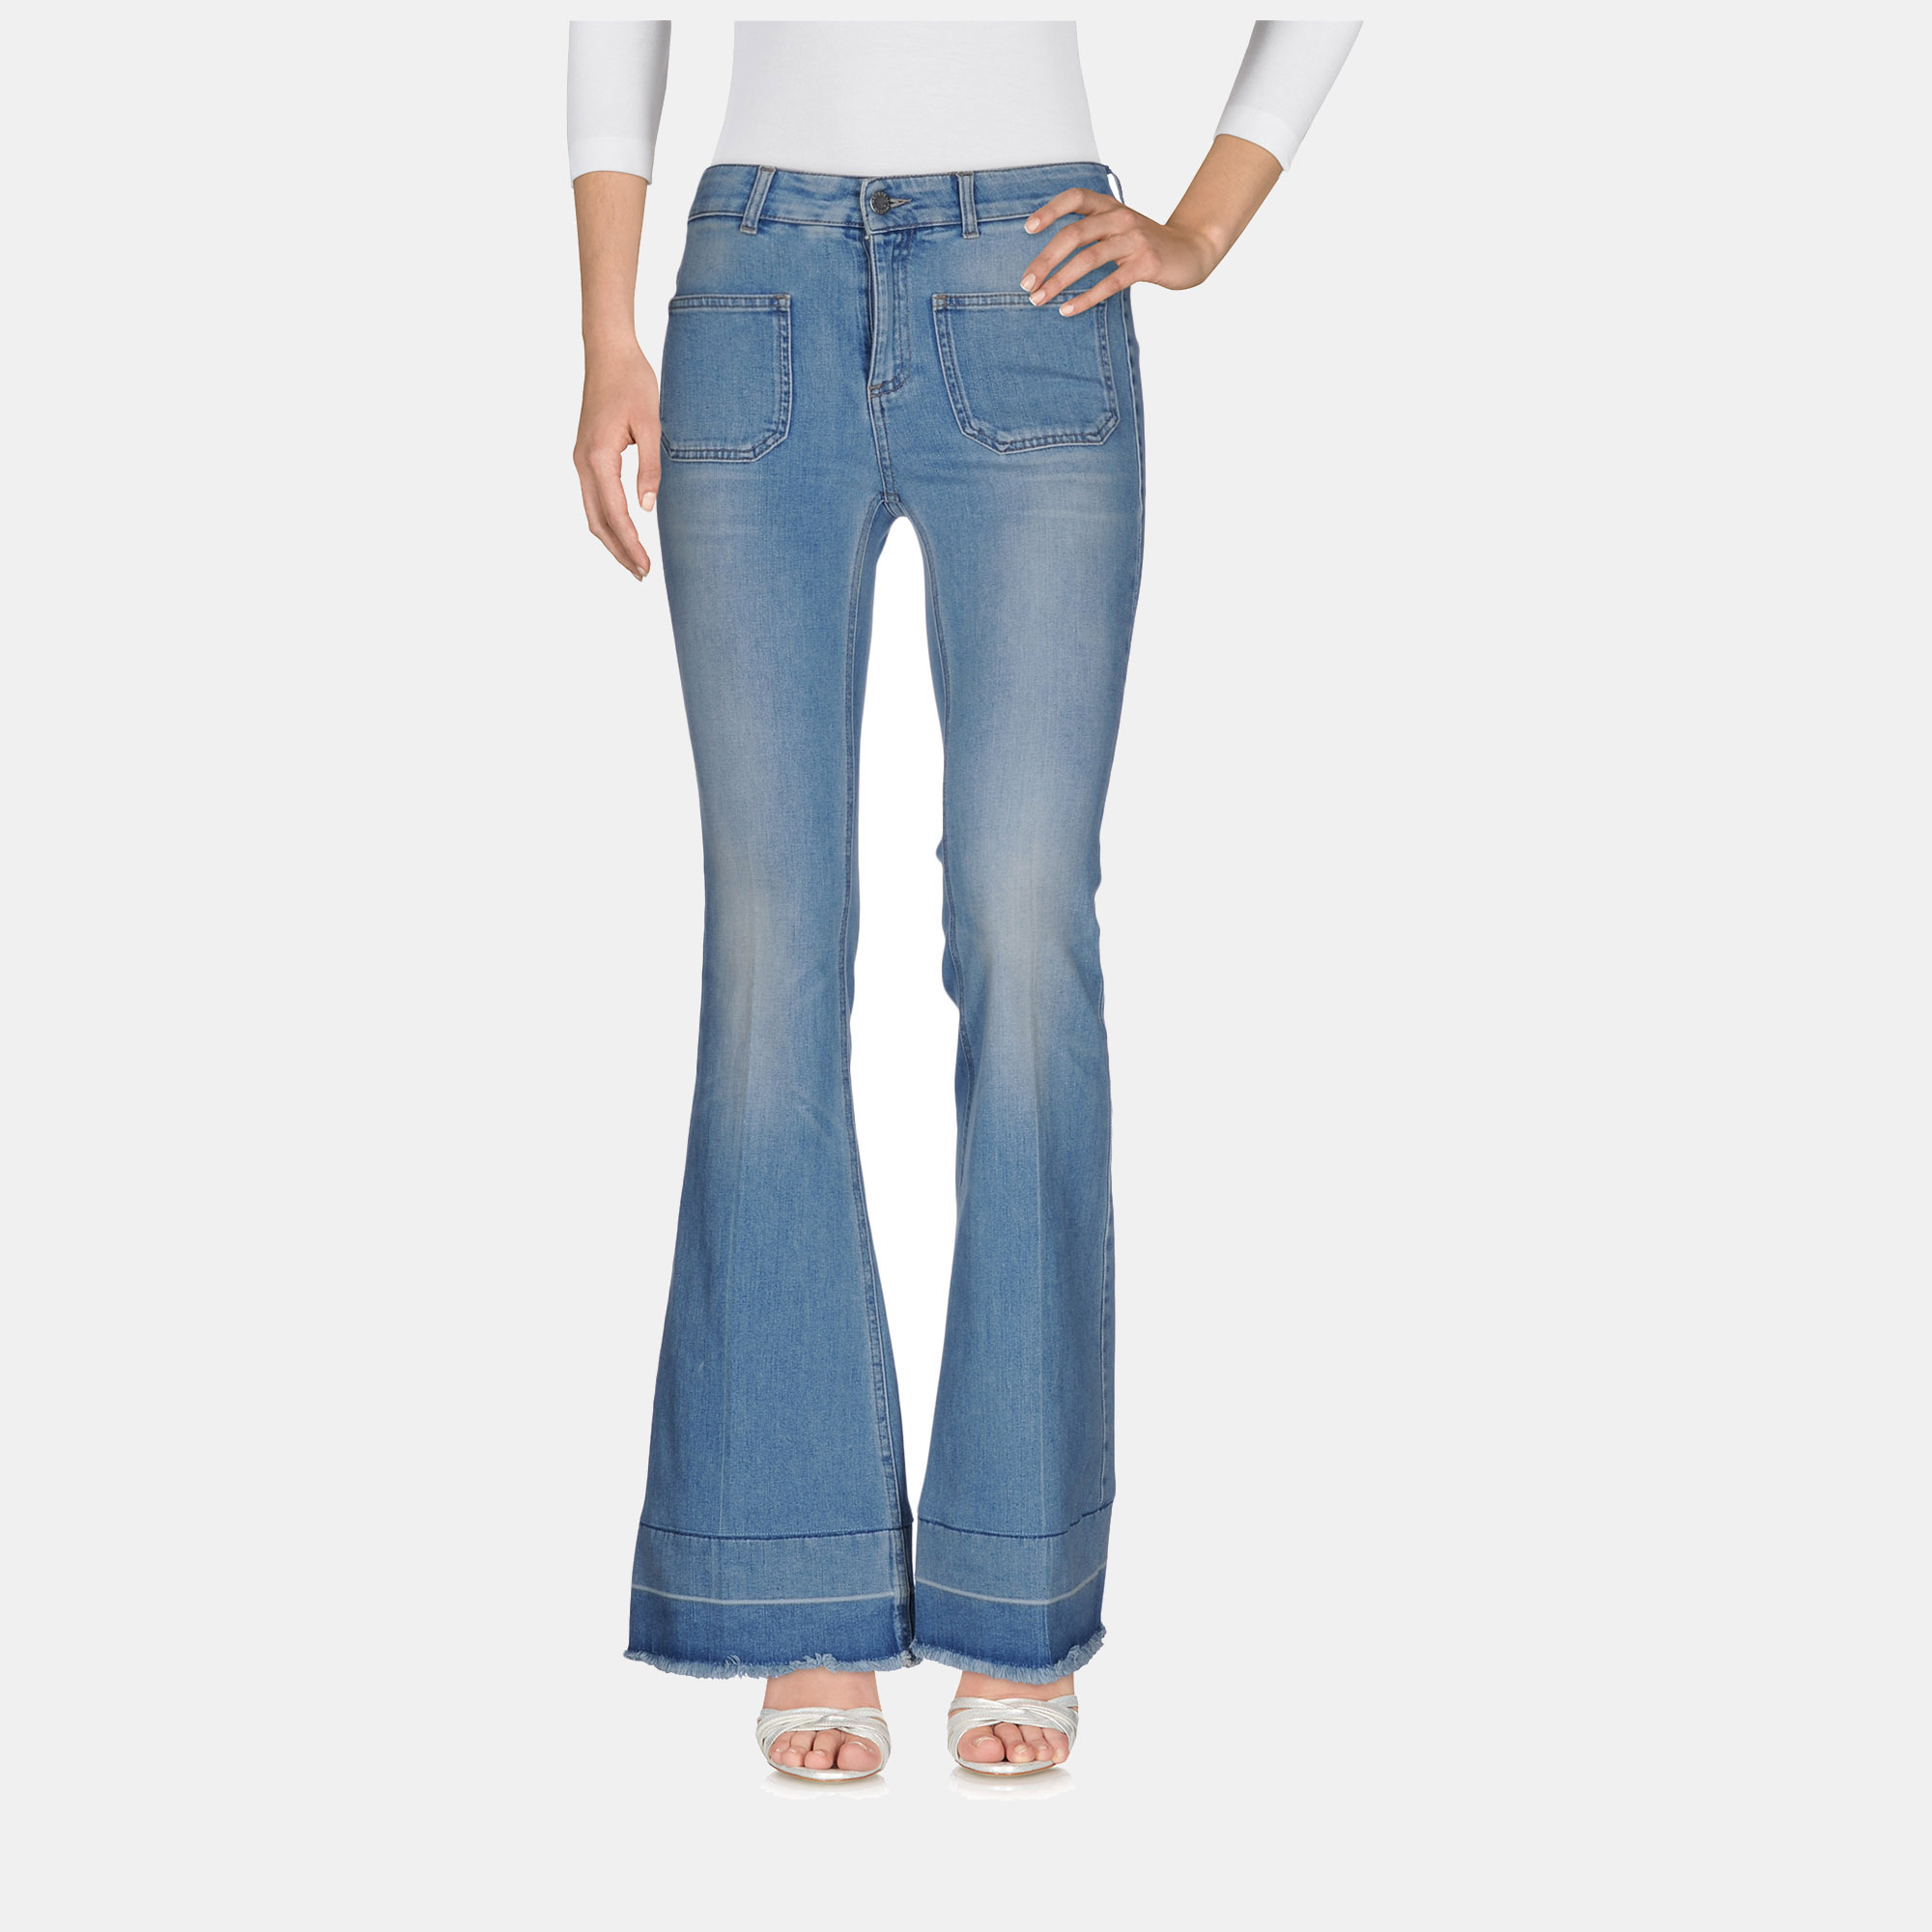 Stella mccartney blue cotton denim flared jeans s (size 25)